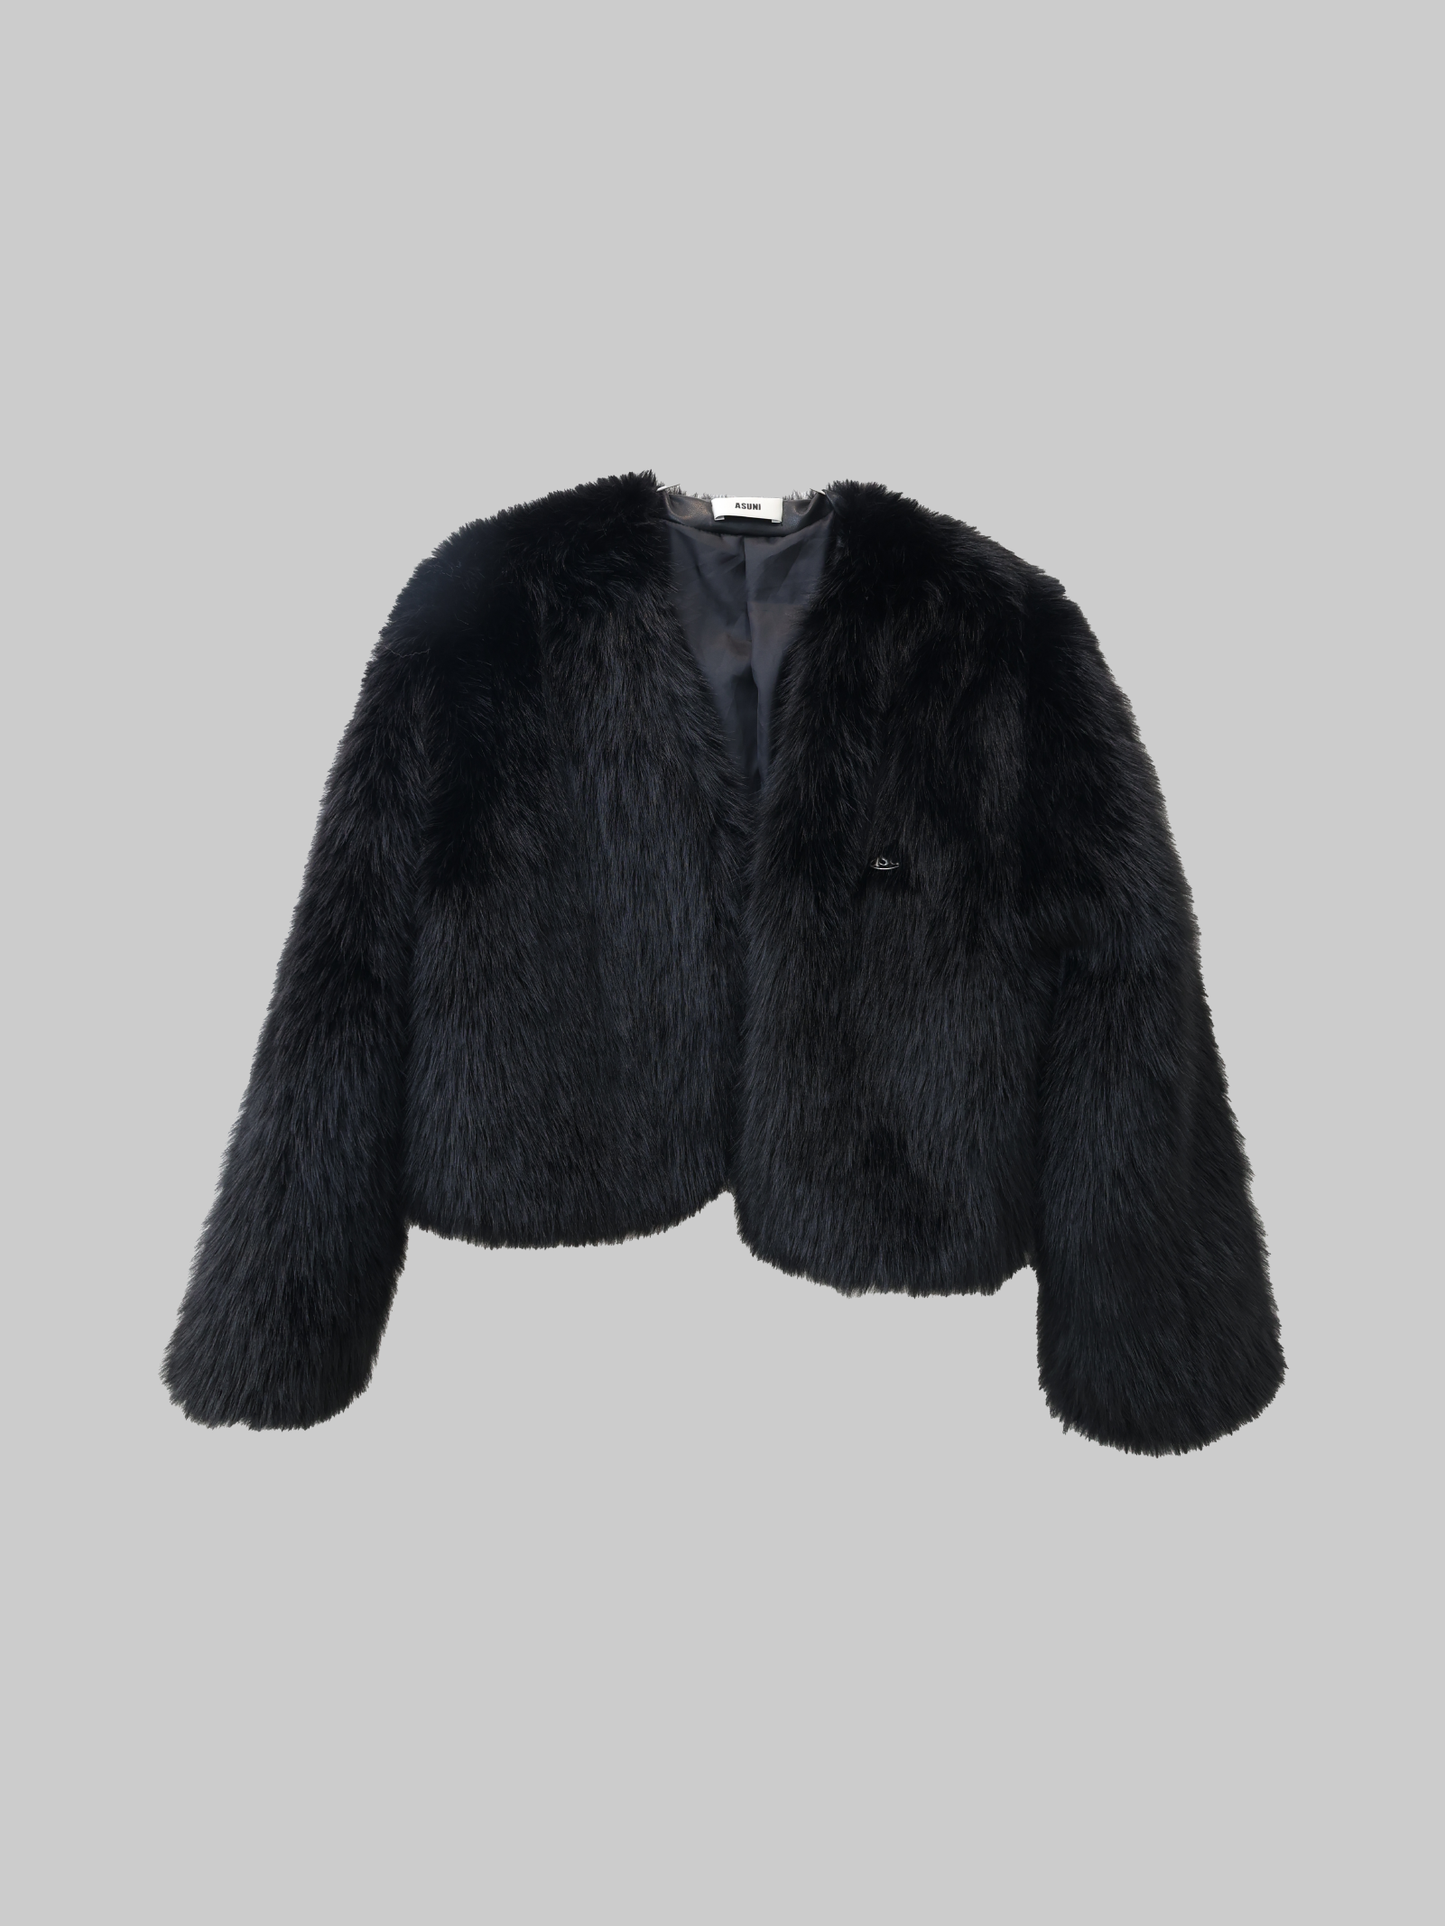 asuni Faux Fur Collar Evening Cape for Winter Coat in black